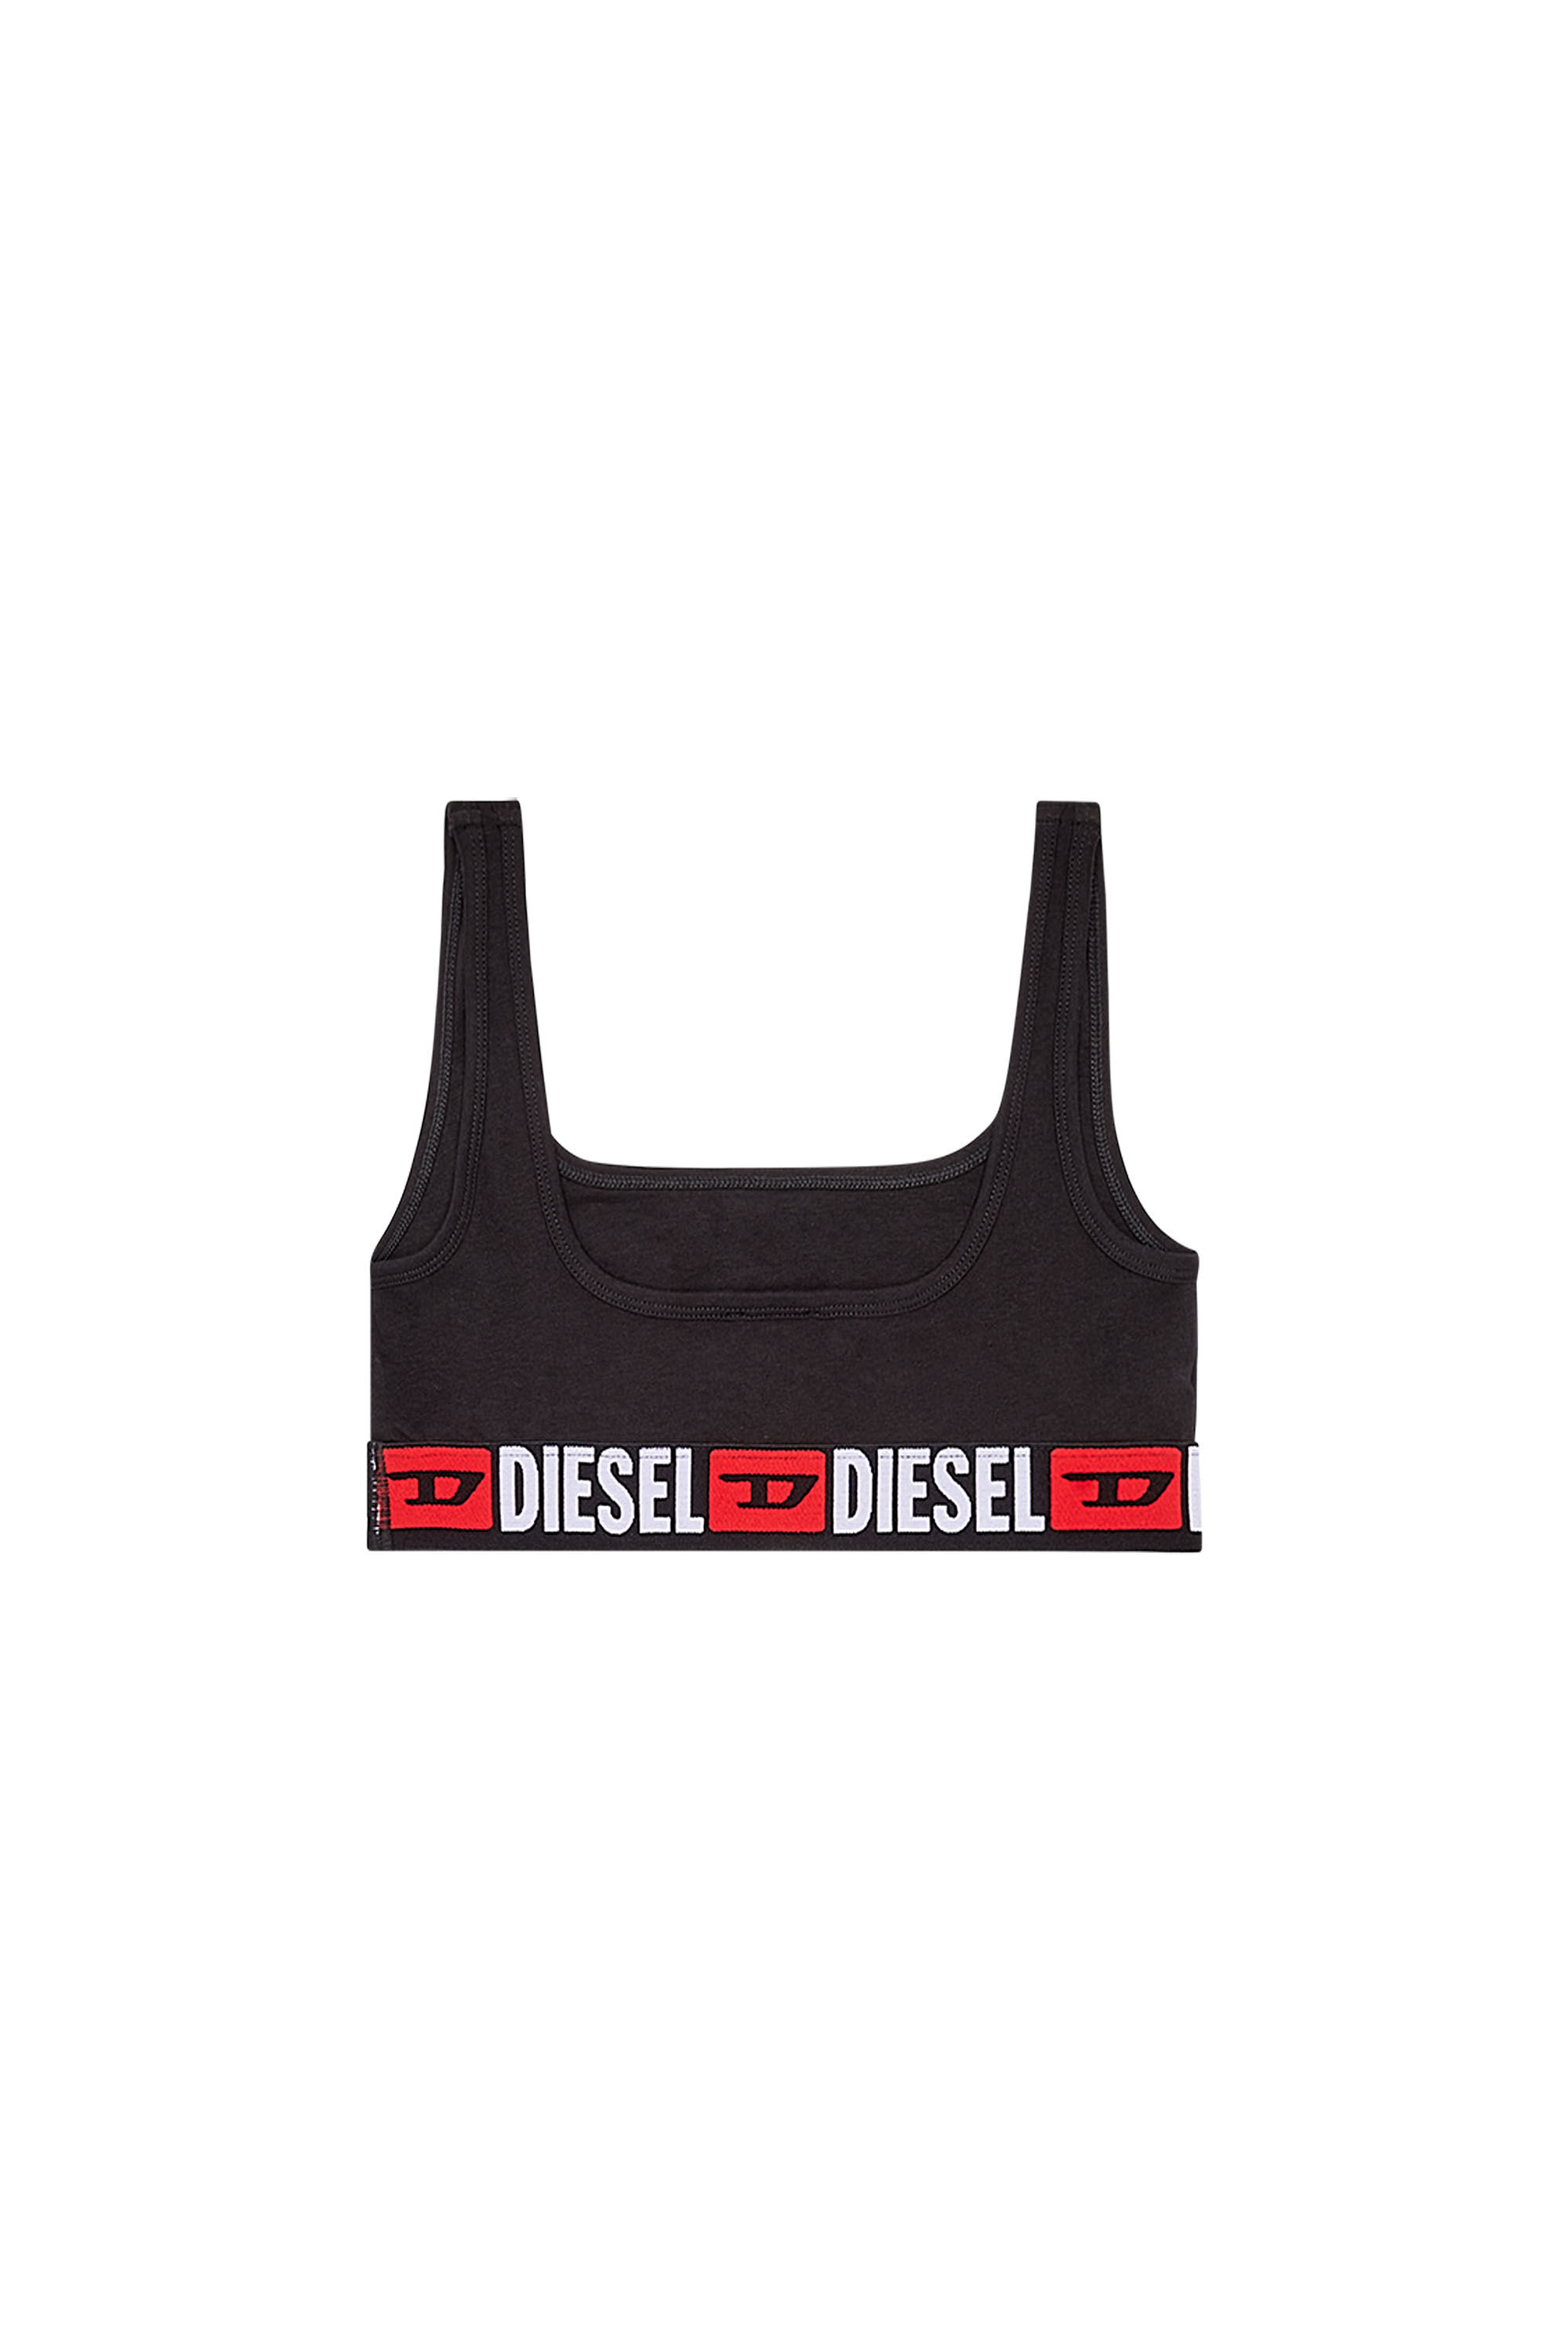 Diesel - UFSB-ORIBA, Black - Image 2